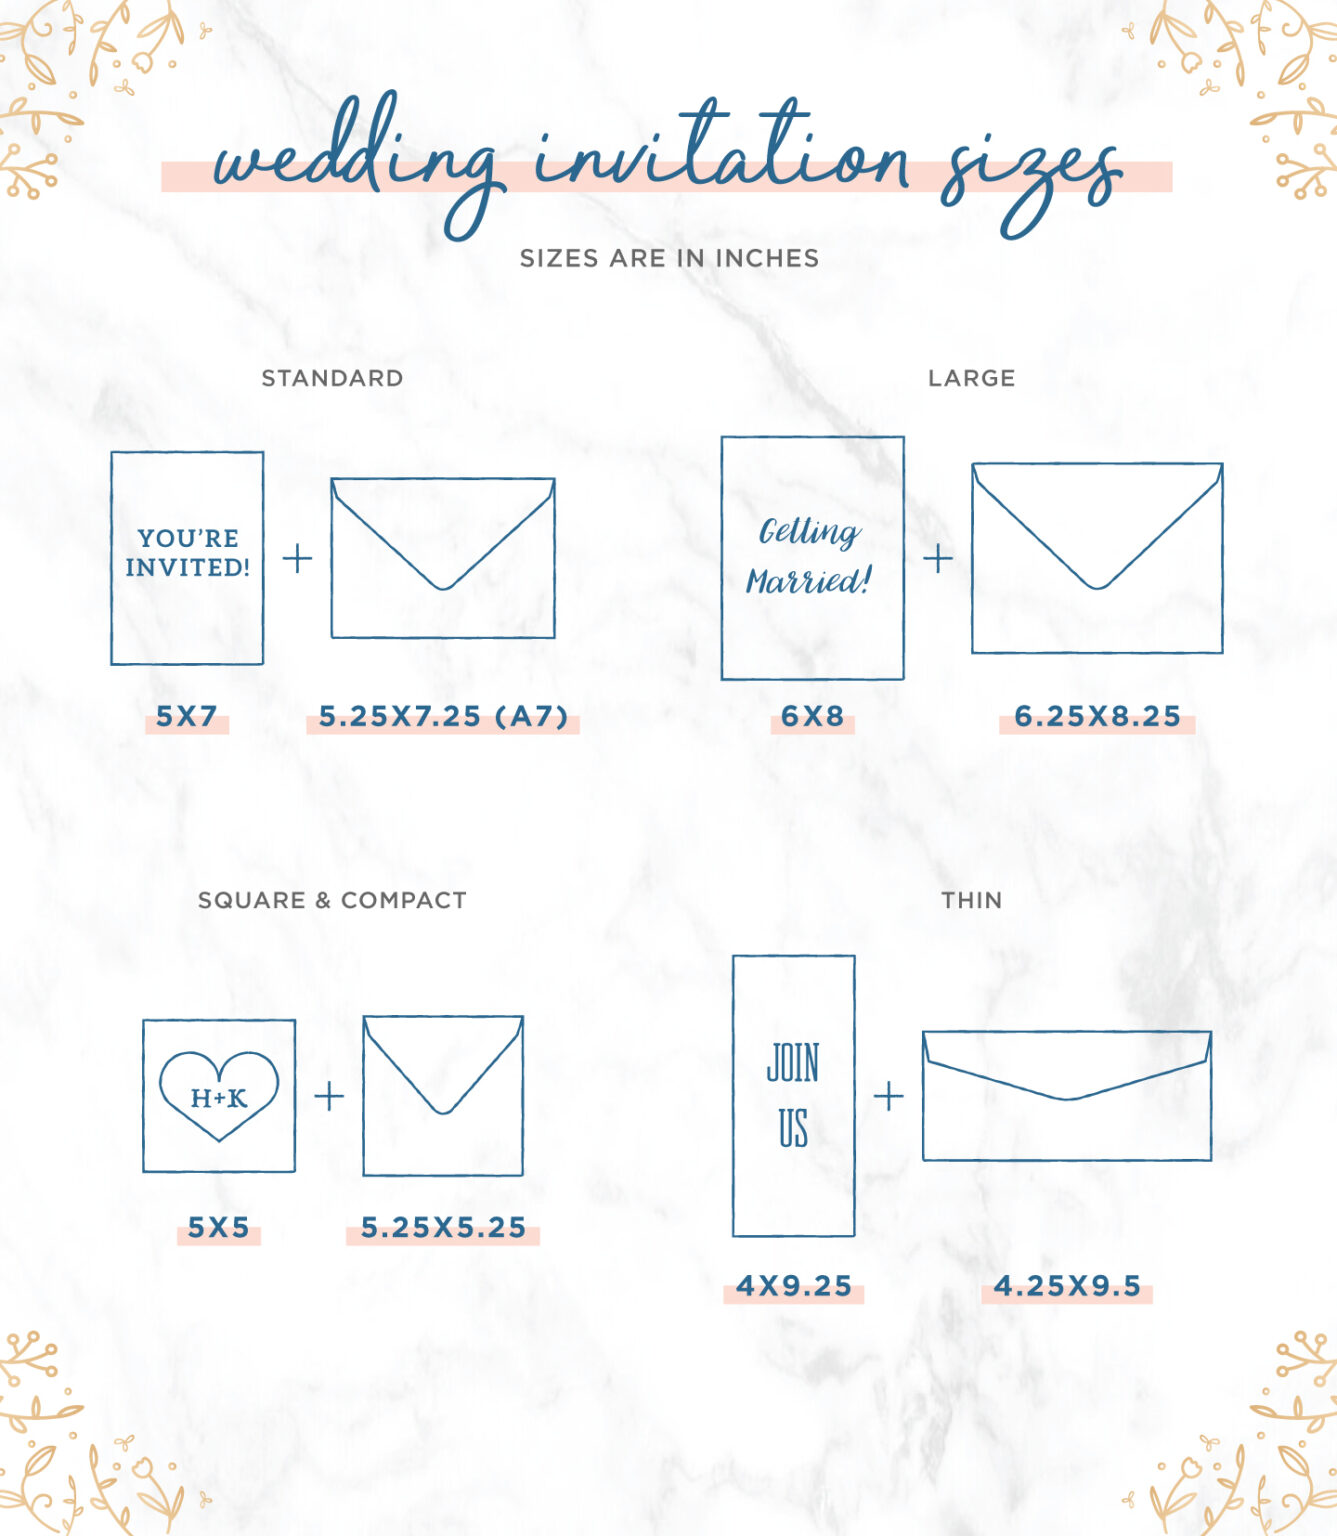 most-popular-wedding-invitation-sizes-tips-shutterfly-within